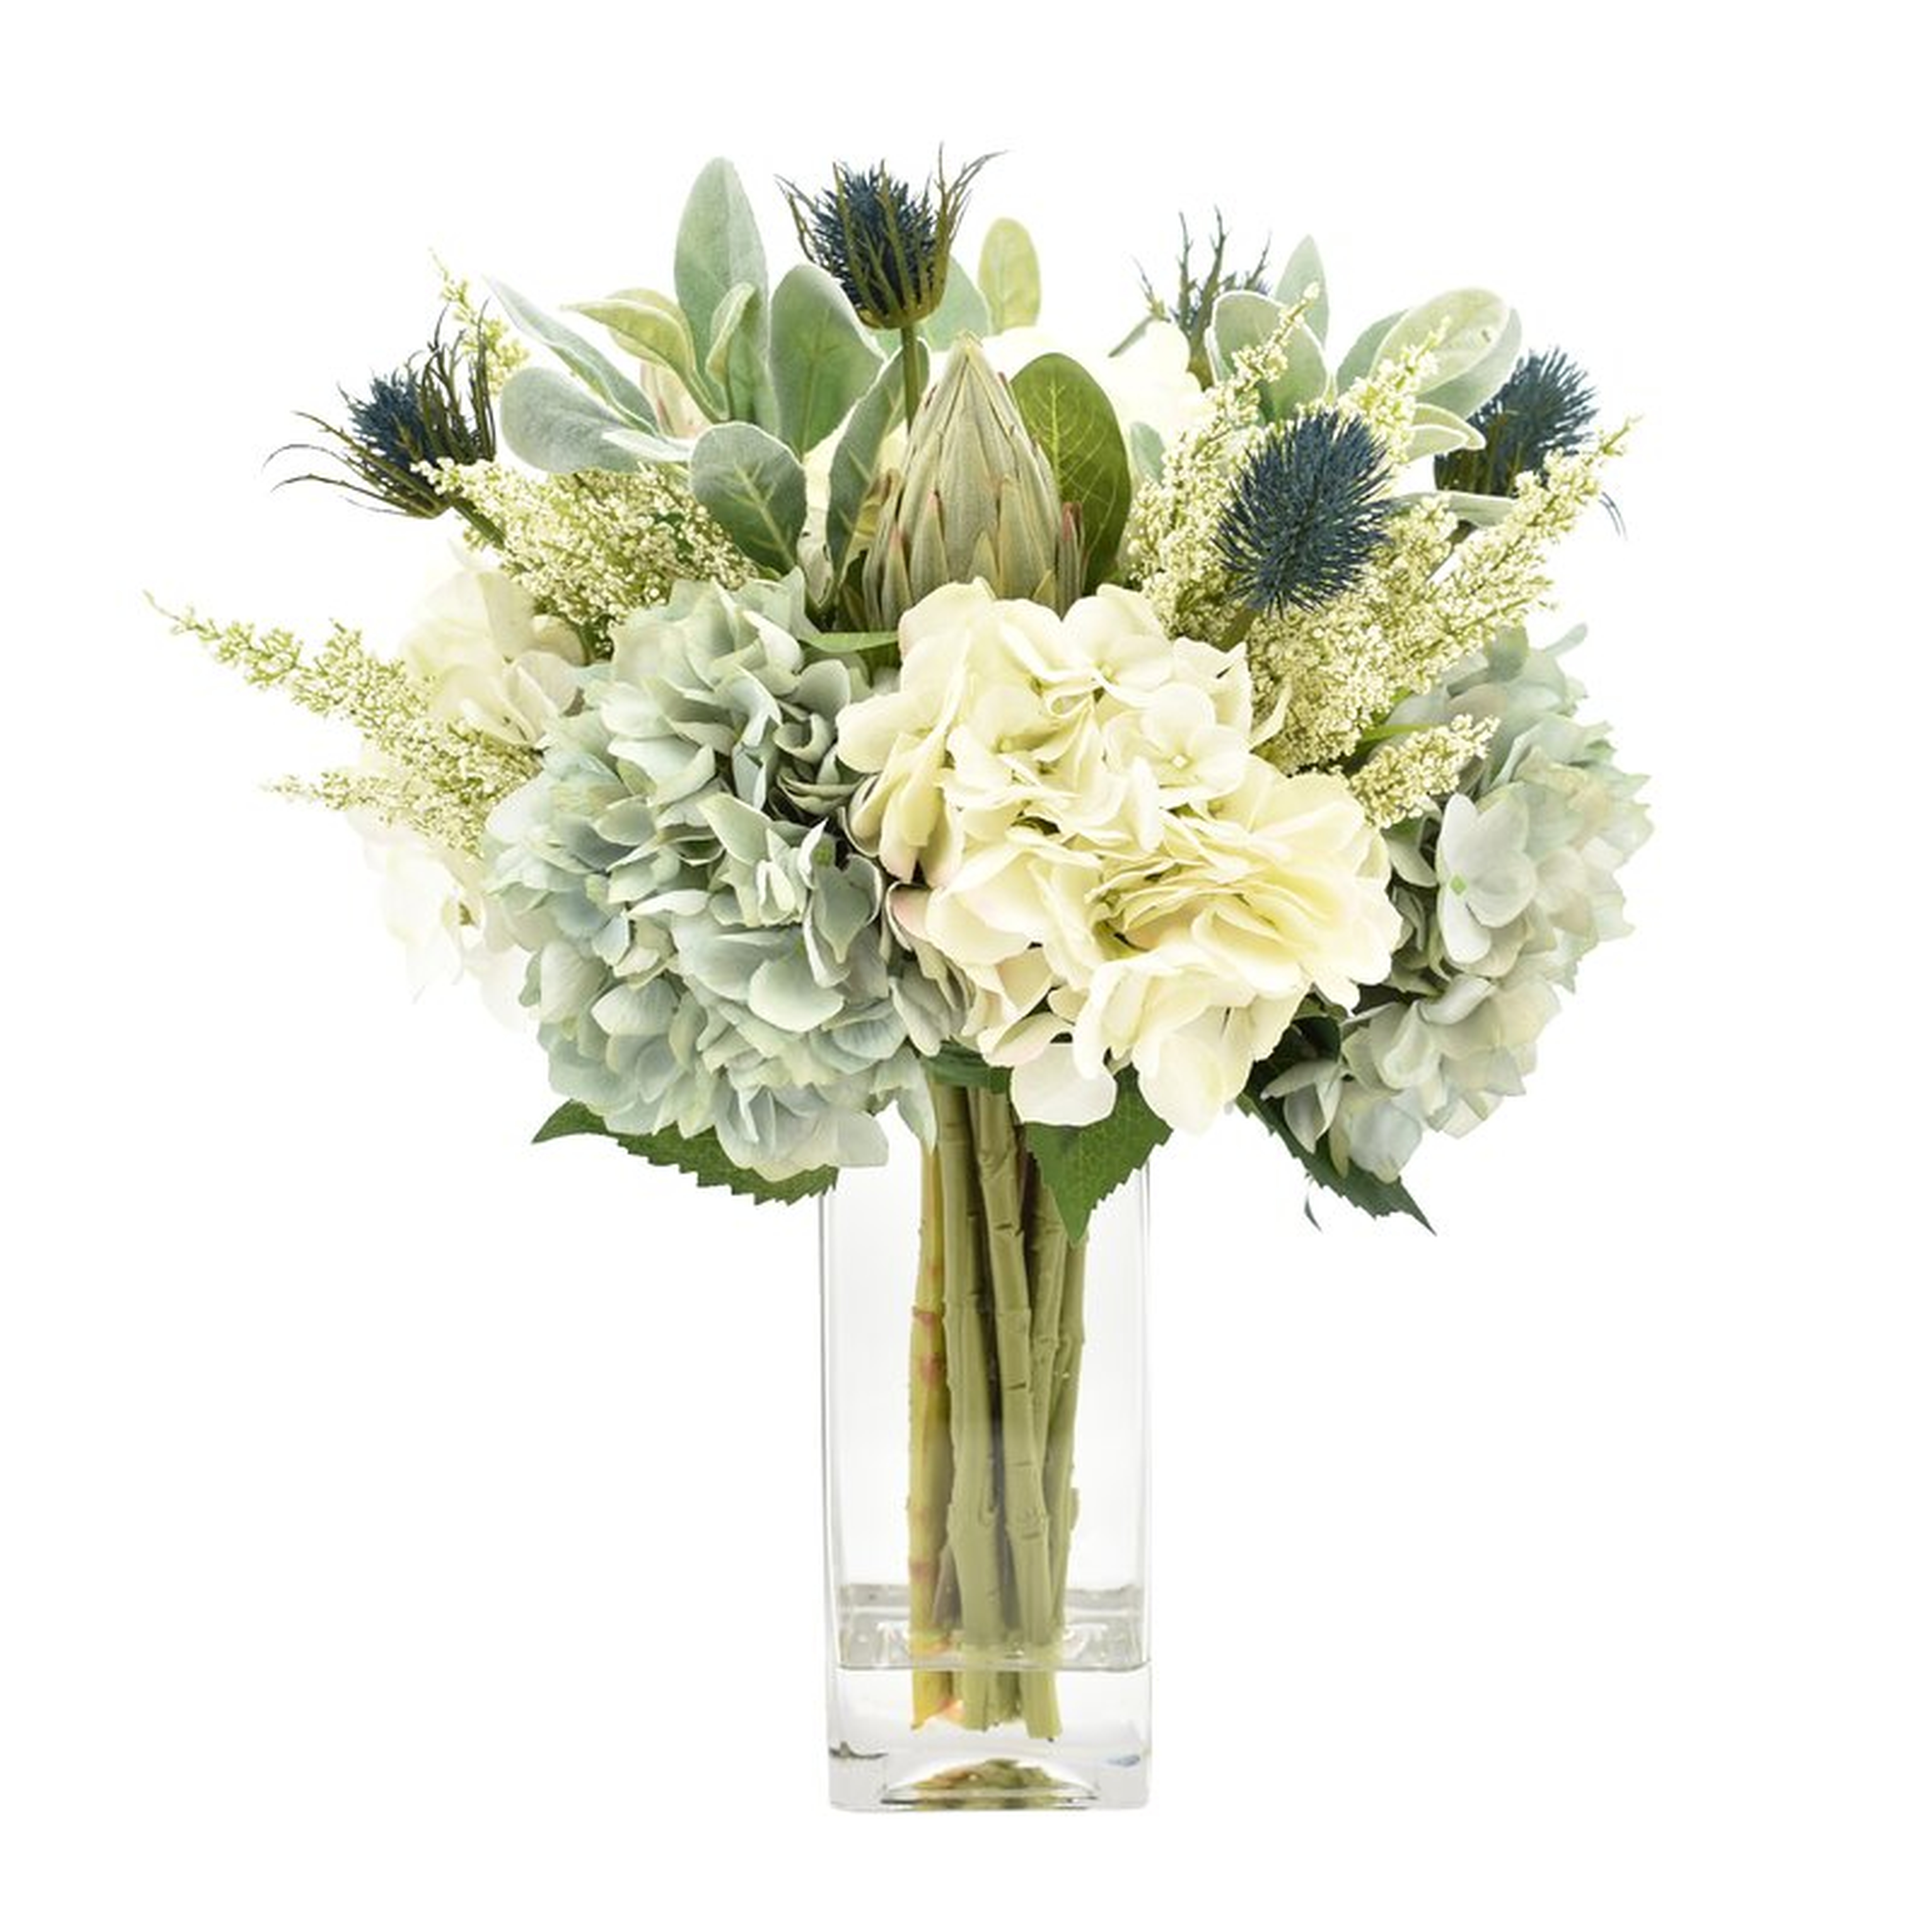 Faux Mixed Floral Arrangement in Vase - Perigold